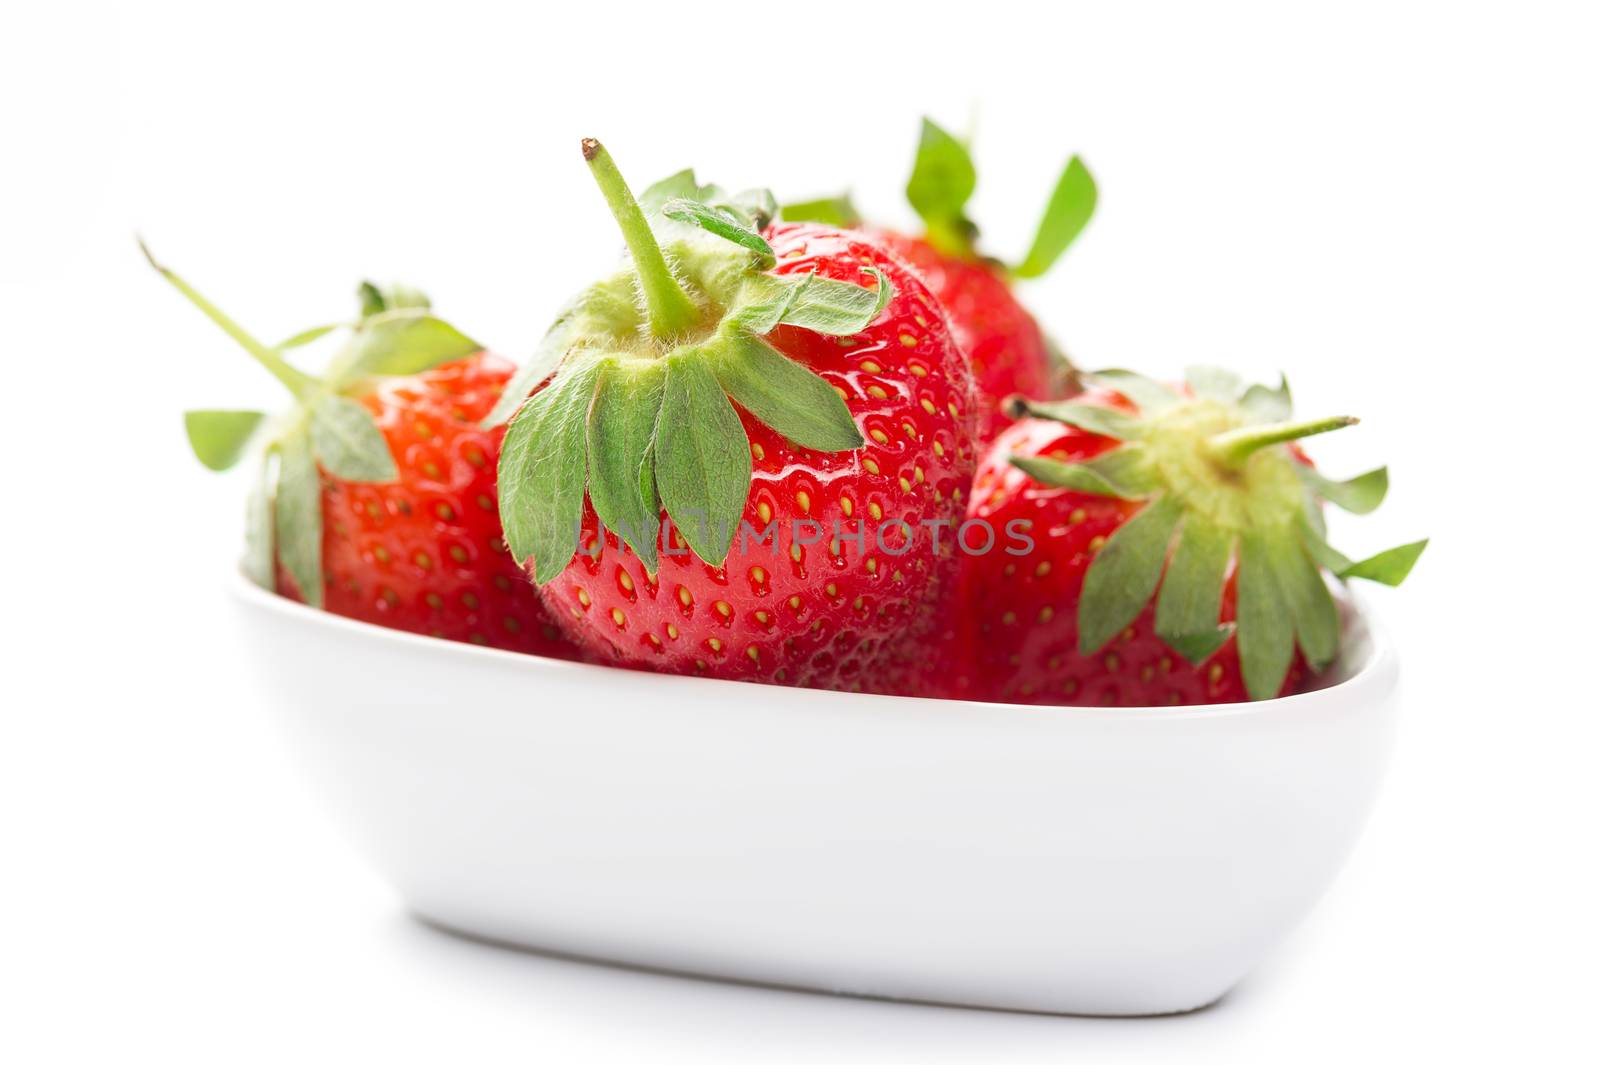 Farm fresh ripe red strawberries by MOELLERTHOMSEN